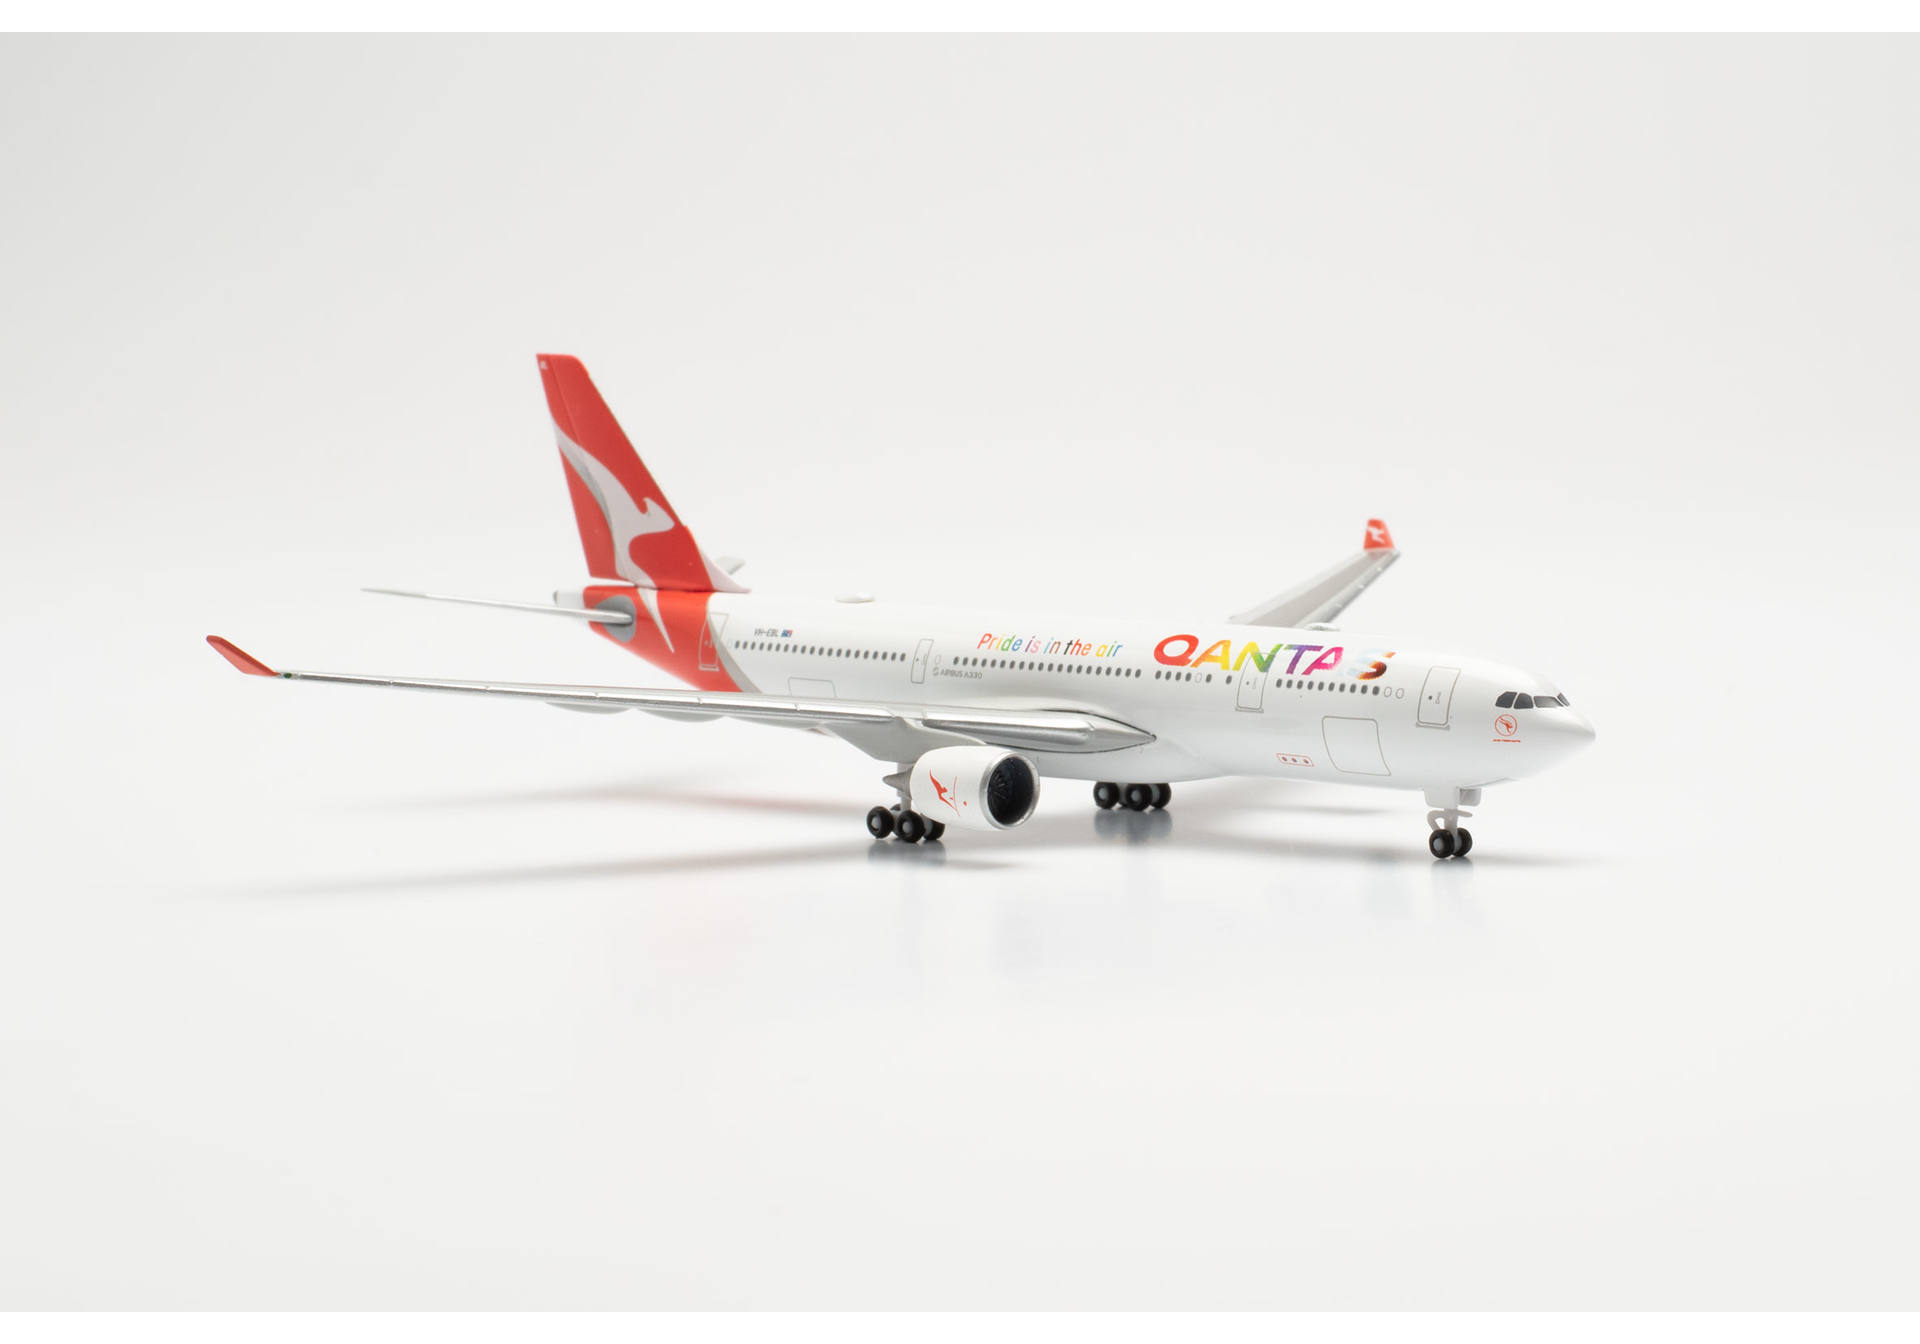 Qantas Airbus A330-200 "Pride is in the Air" – VH-EBL "Whitsundays"